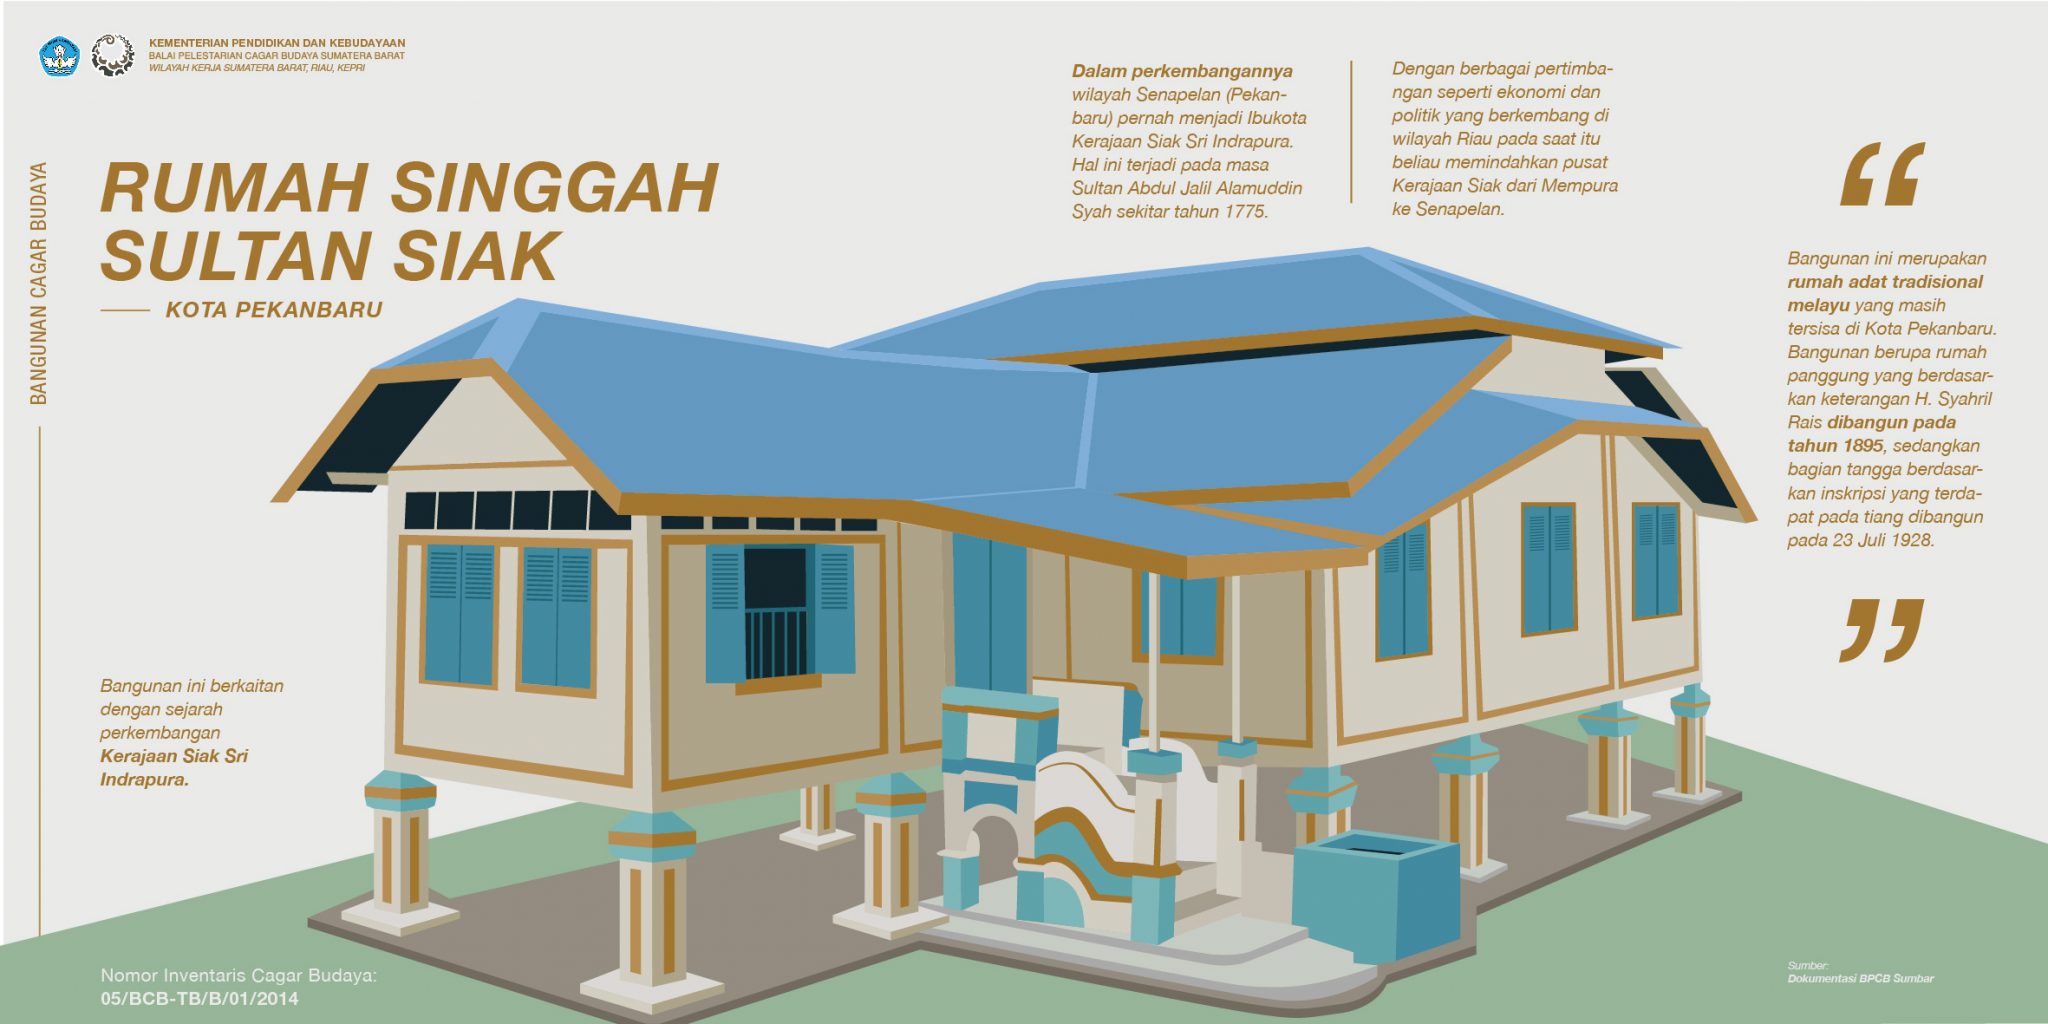 Mengenal Rumah Singgah Sultan di Pekanbaru  Balai Pelestarian Cagar